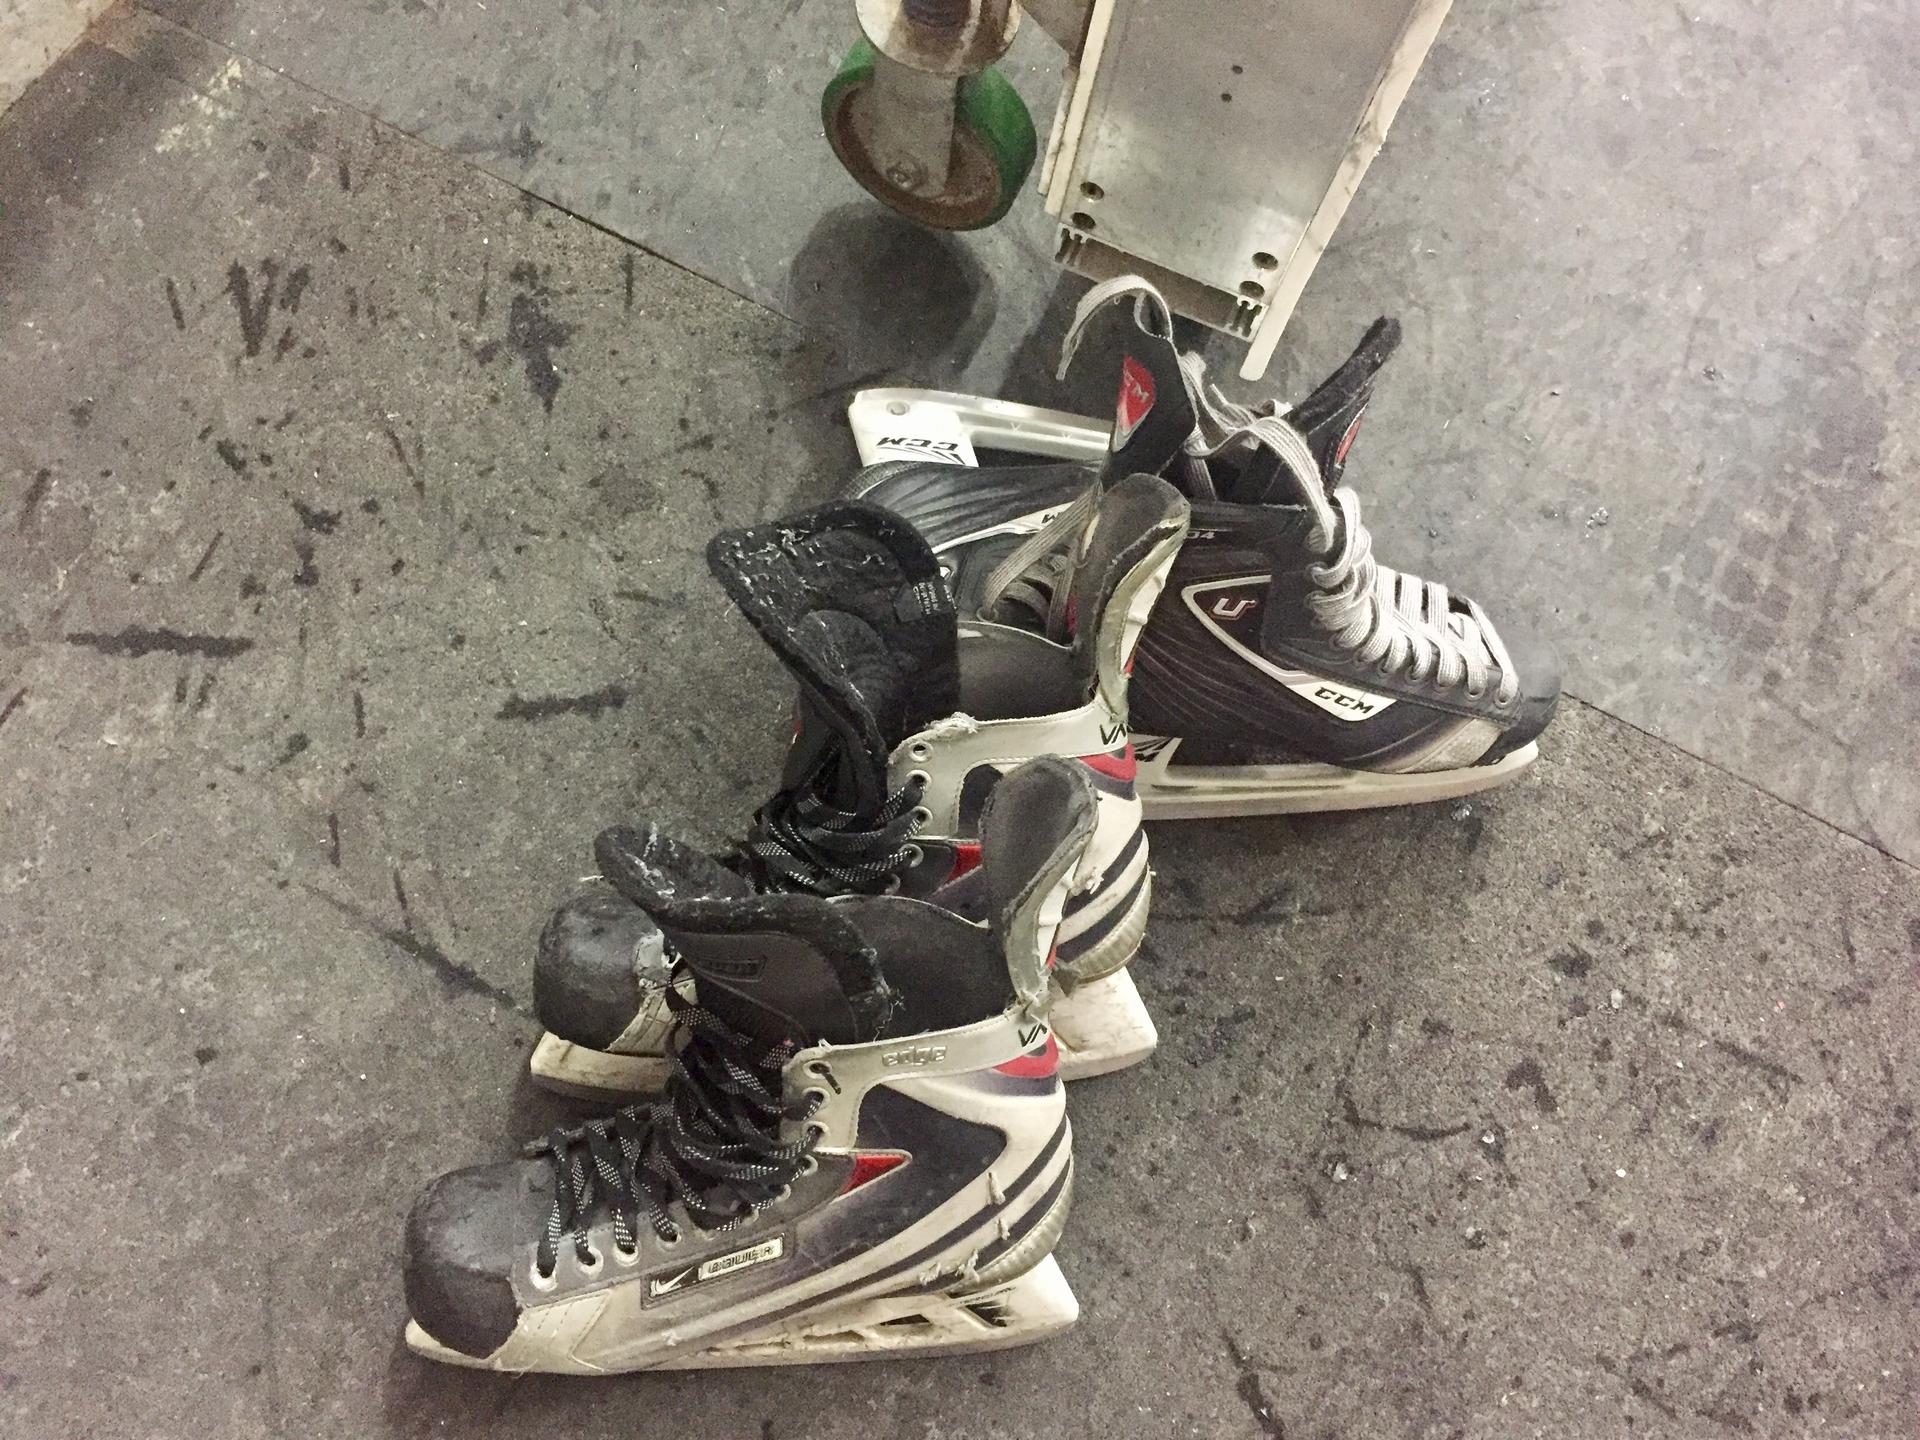 Close up of hockey skates on the floor.